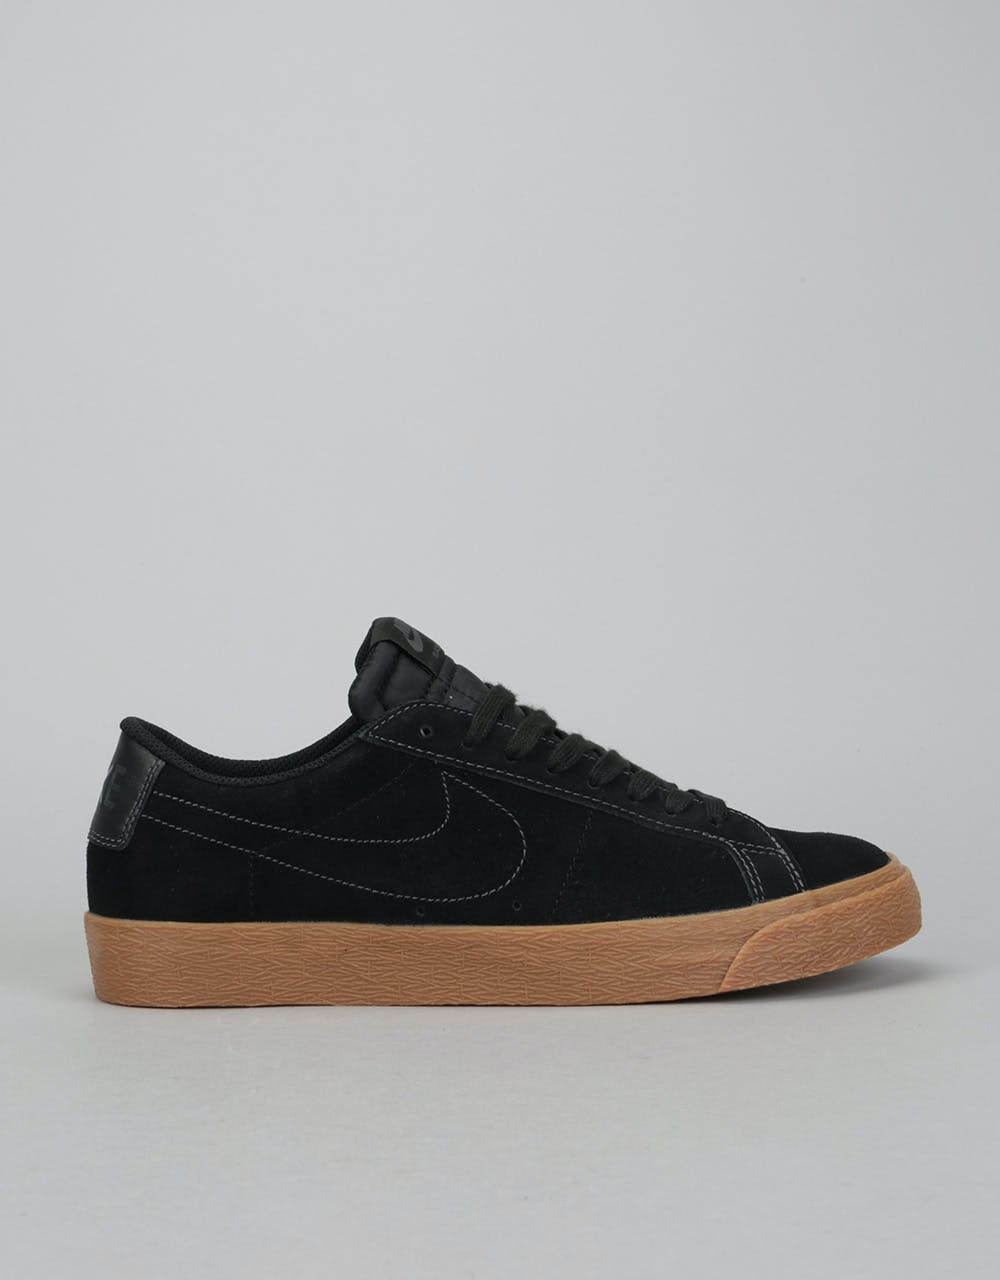 Nike SB Zoom Blazer Low Skate Shoes - Black/Black-Anthracite